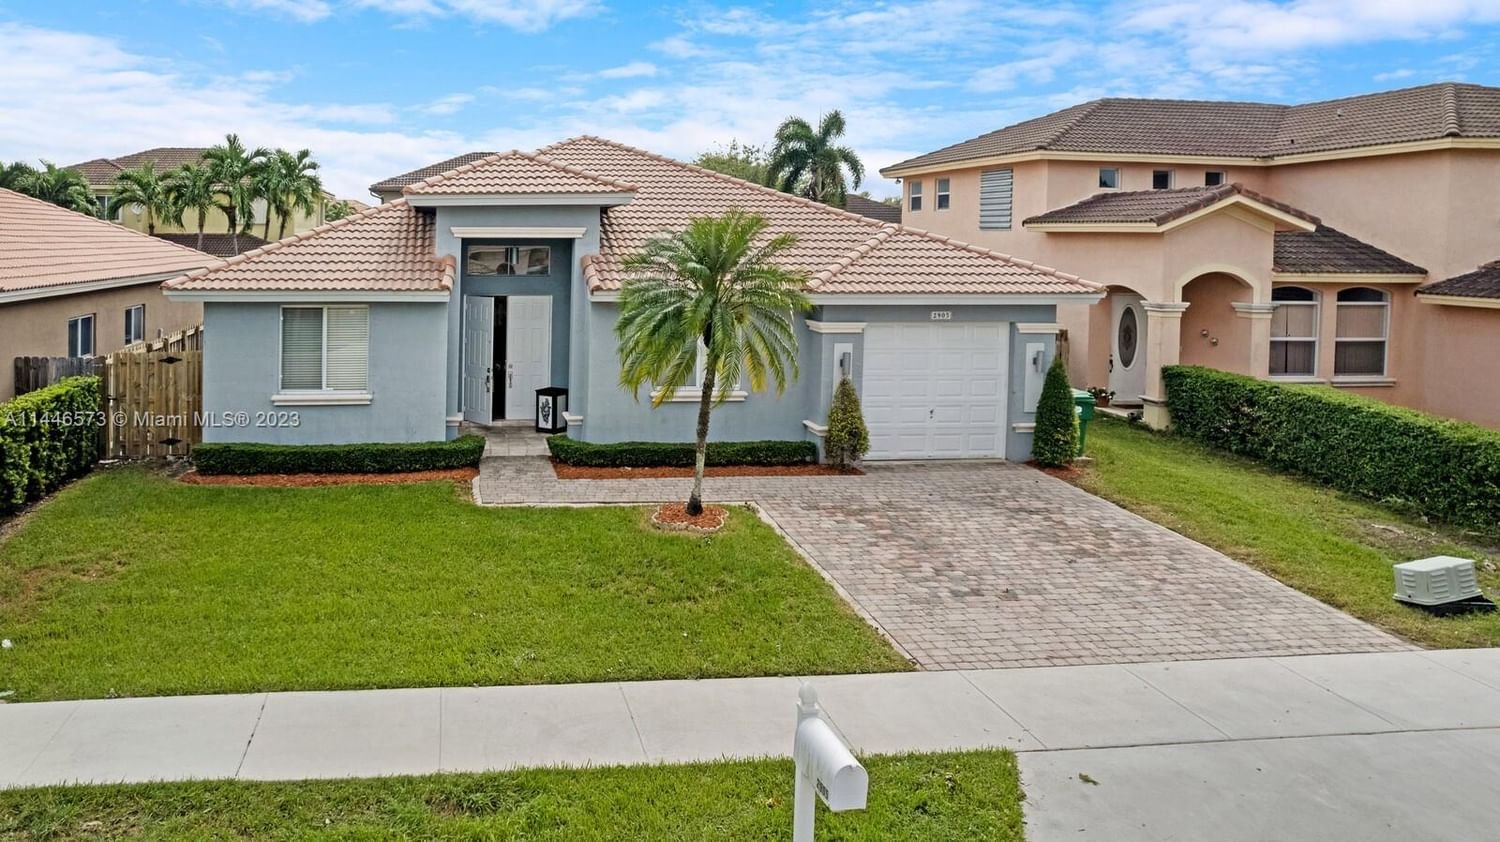 Real estate property located at 2905 145th Ave, Miami-Dade County, Miami, FL